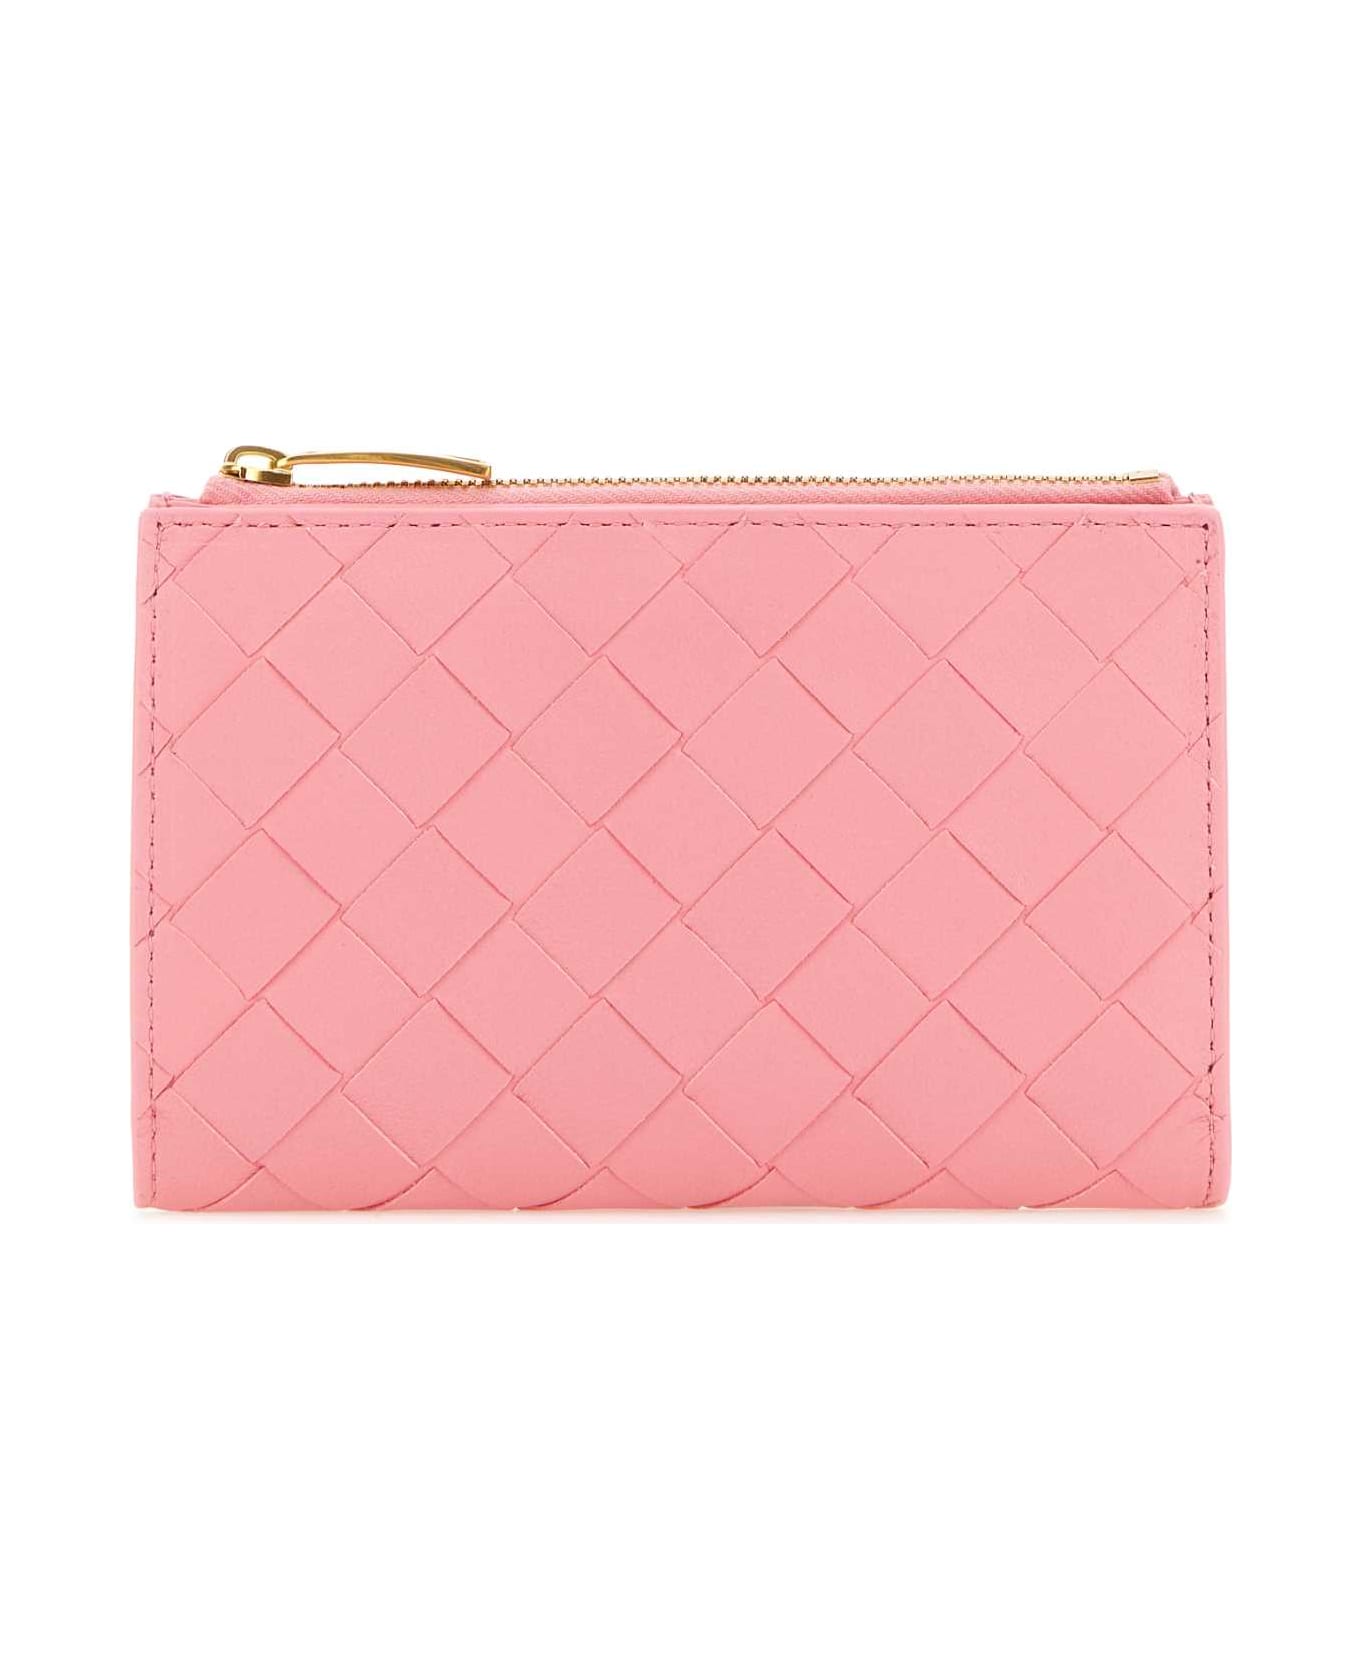 Bottega Veneta Pink Nappa Leather Medium Intrecciato Wallet - PINK